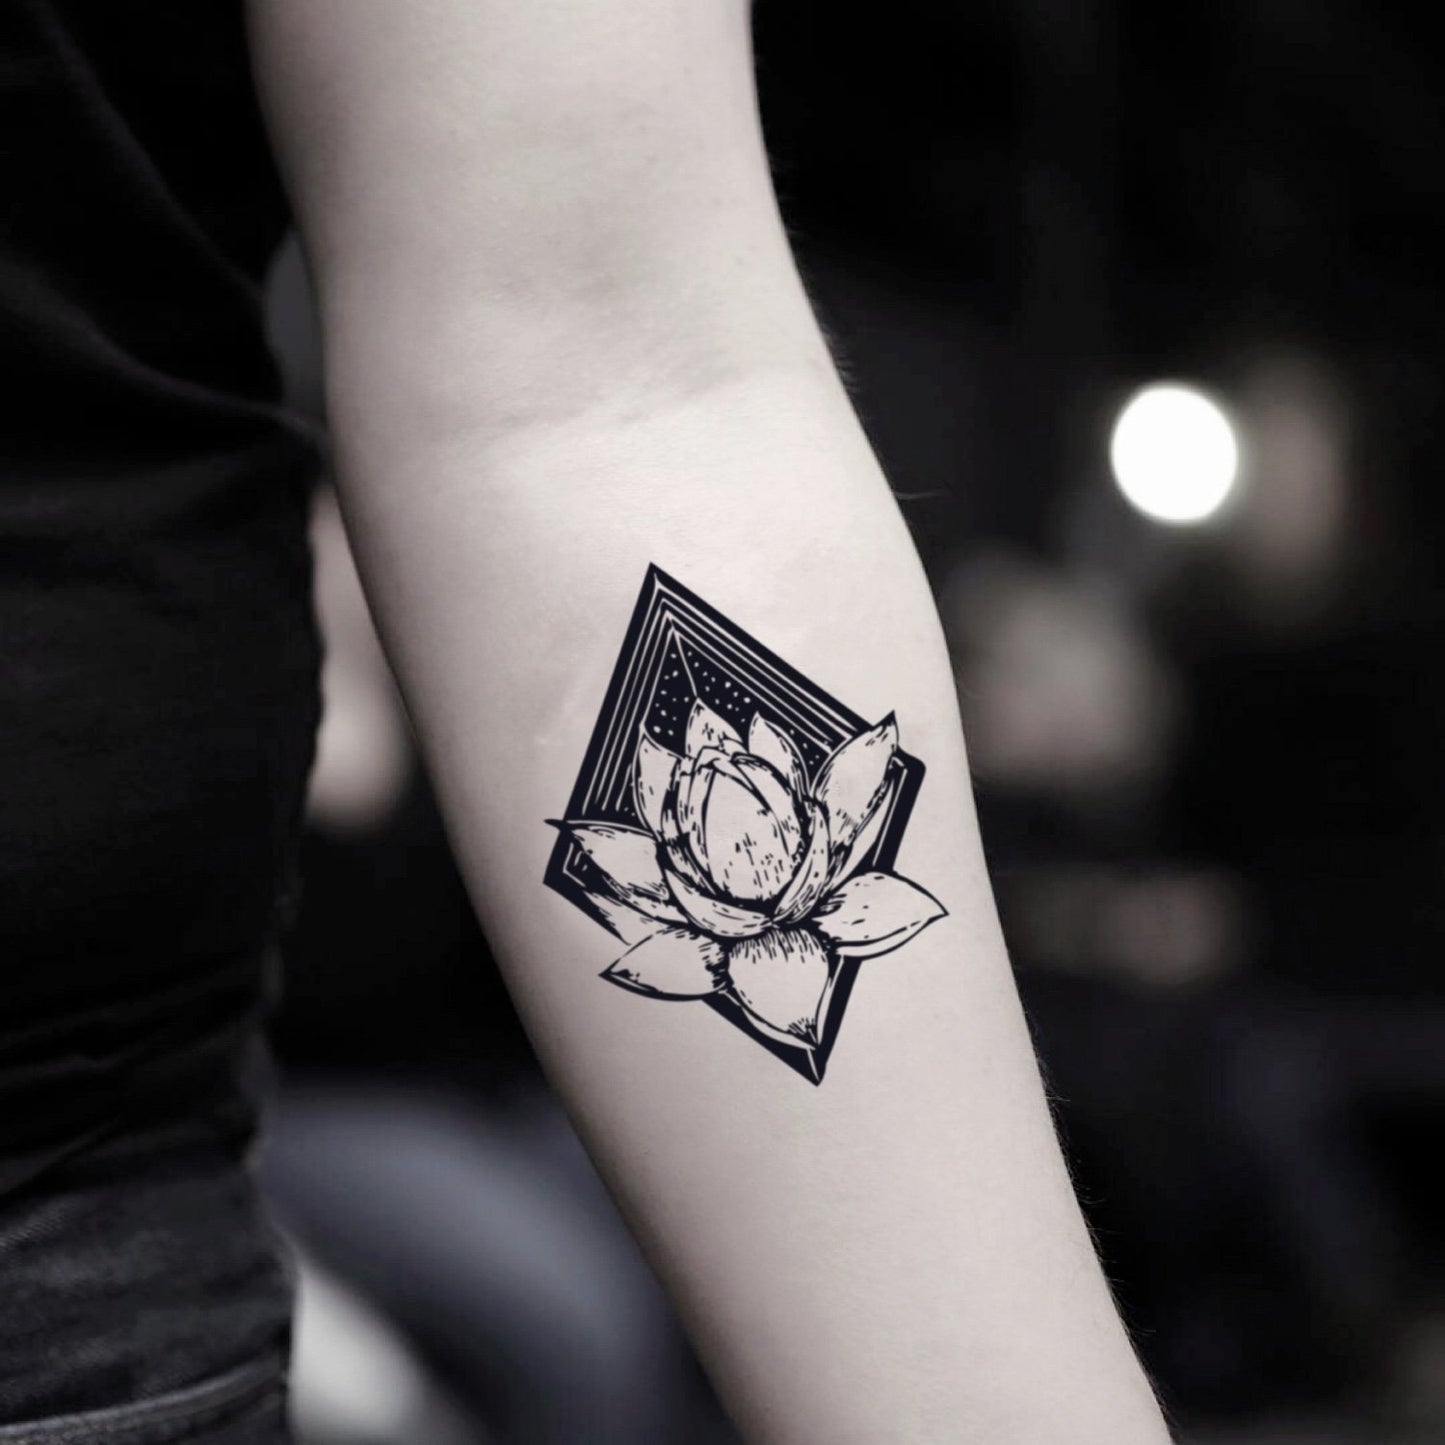 fake small tropical flower temporary tattoo sticker design idea on inner arm